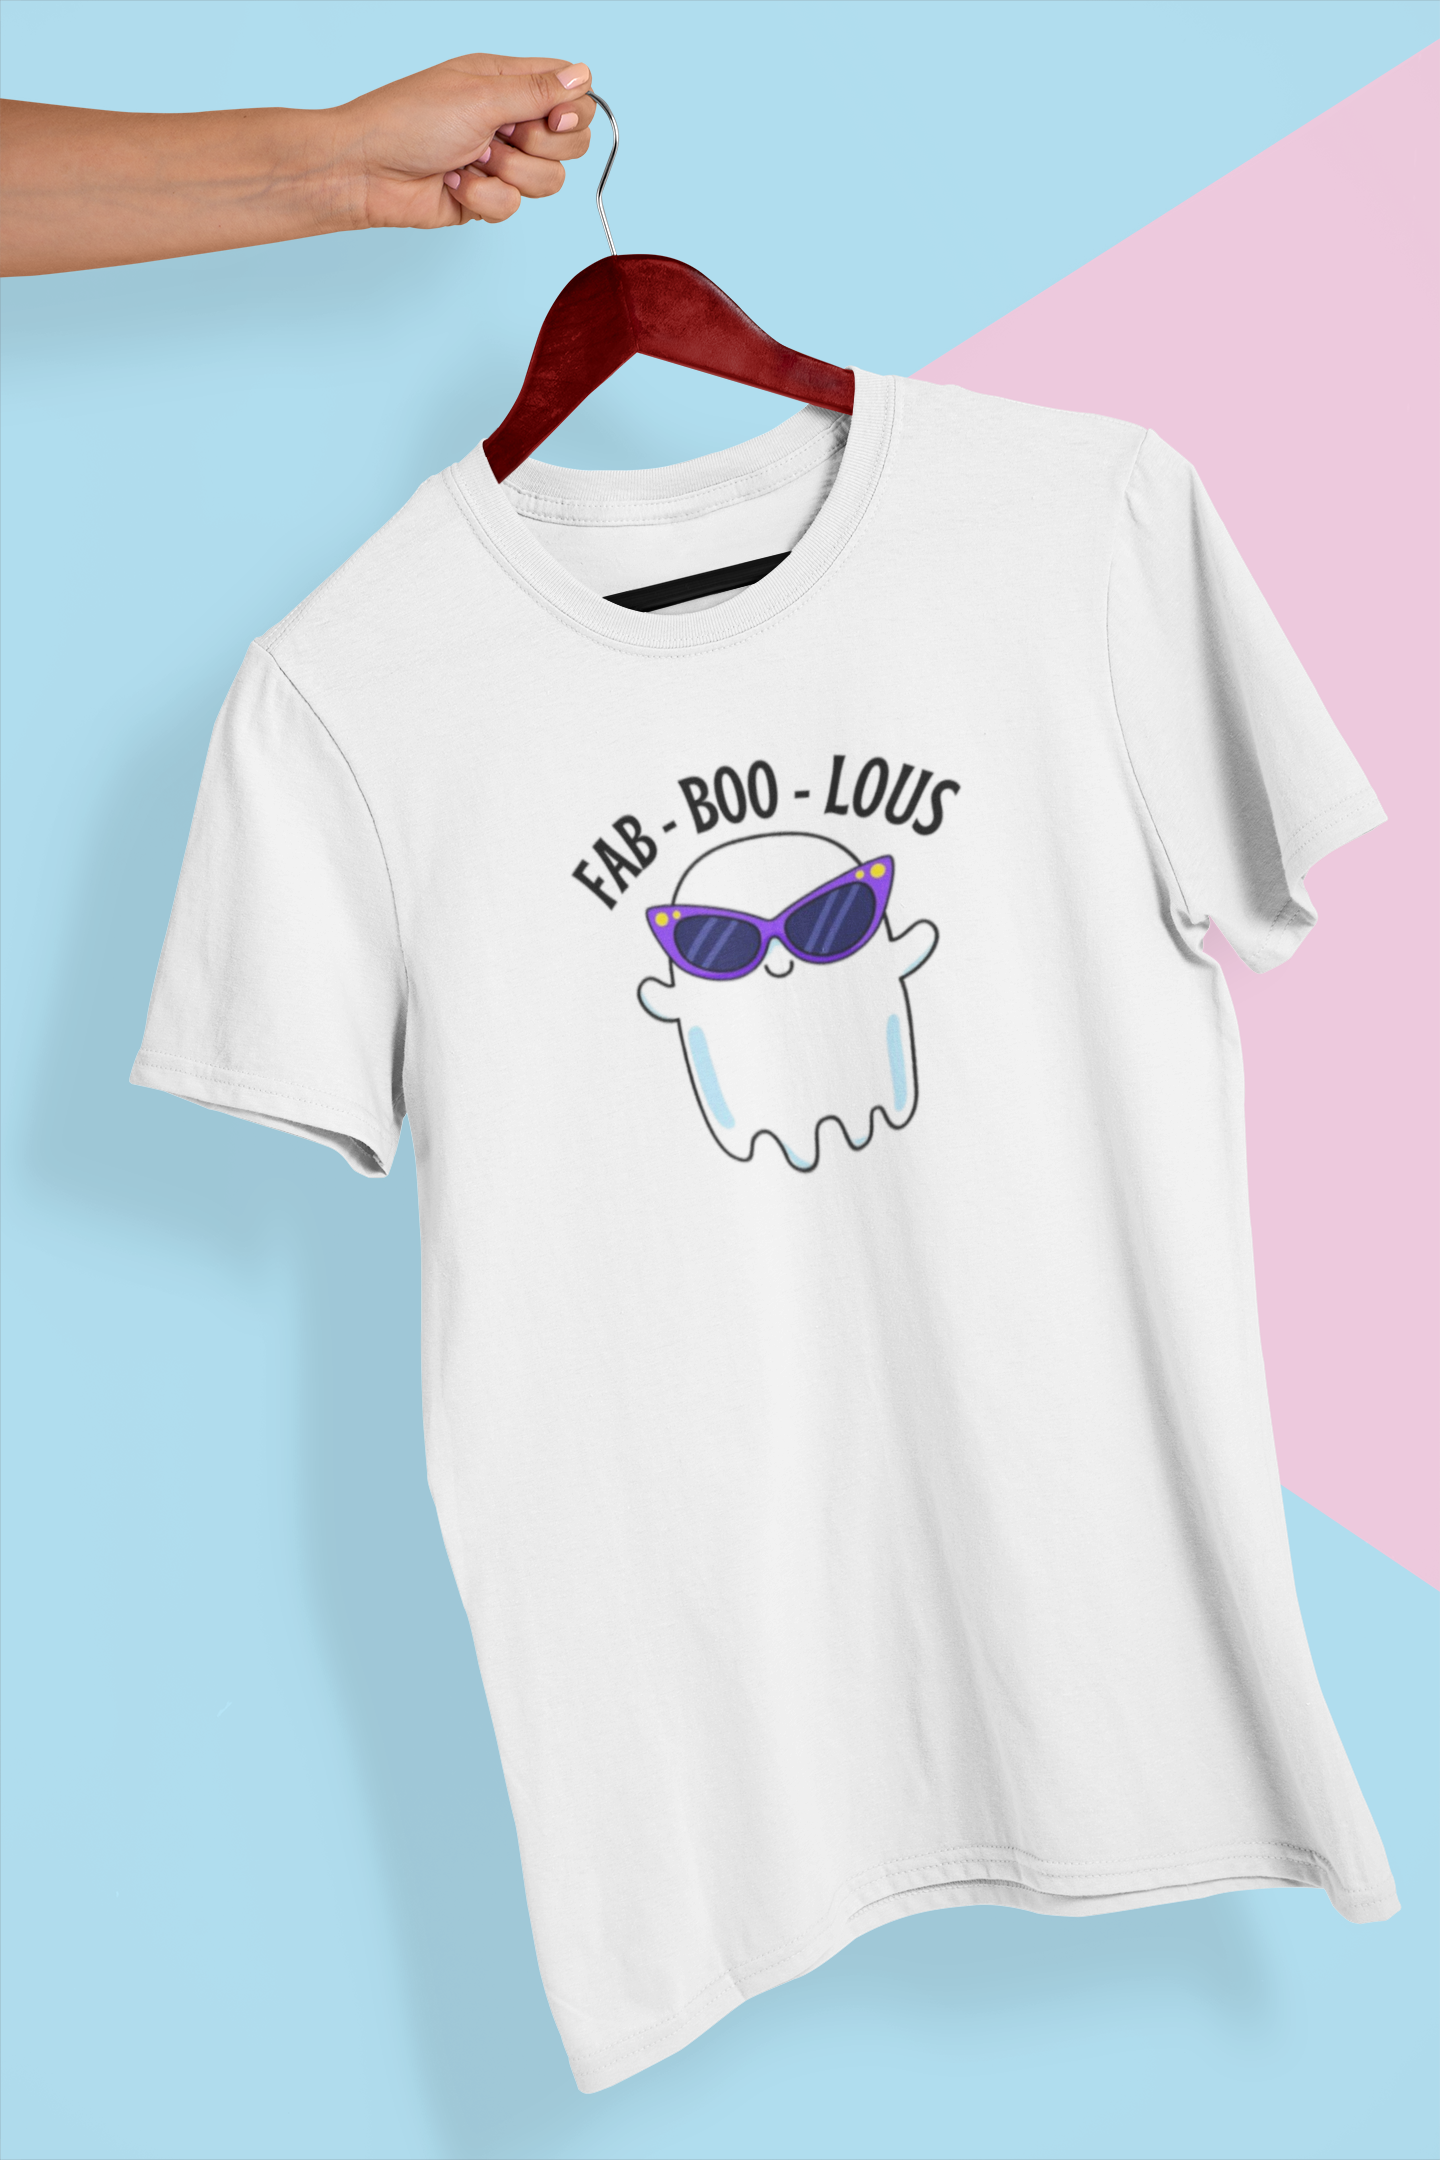 fab-boo-lous quote t-shirt unisex t-shirt theteeshop